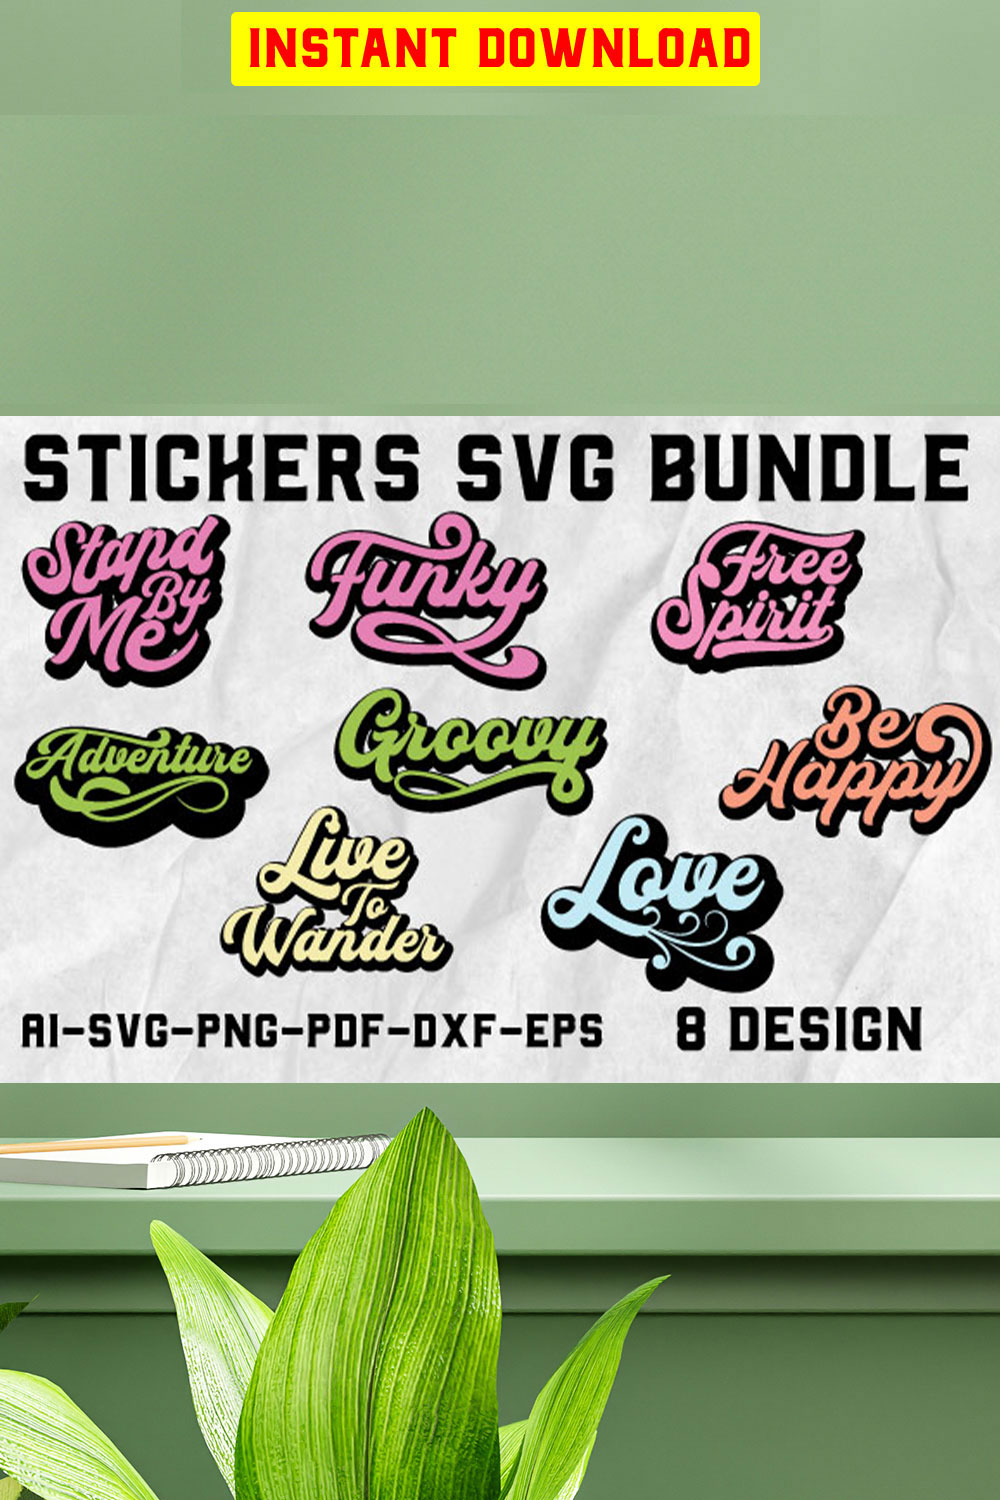 Stickers SVG Bundle pinterest preview image.